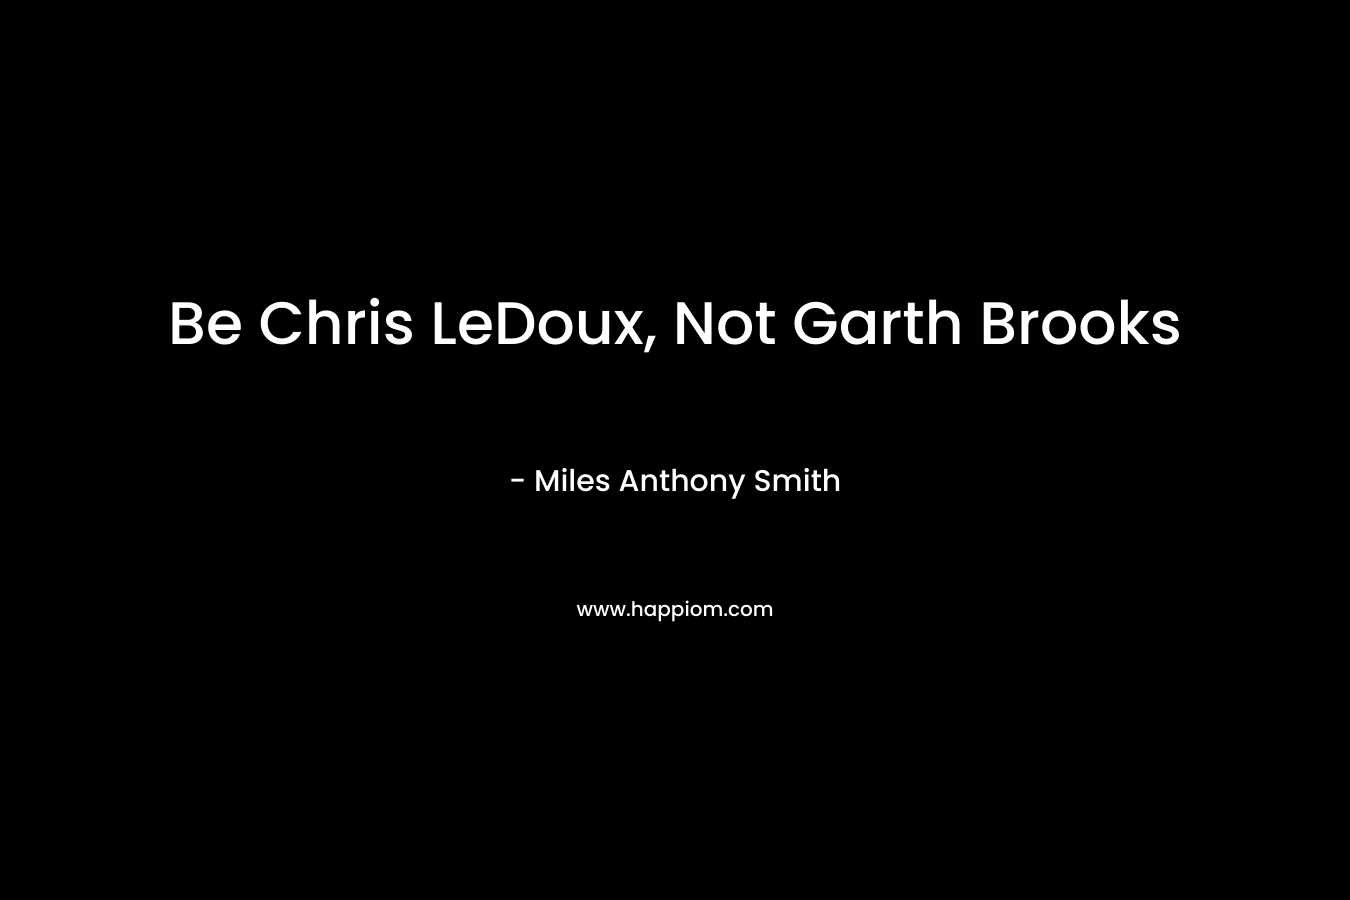 Be Chris LeDoux, Not Garth Brooks